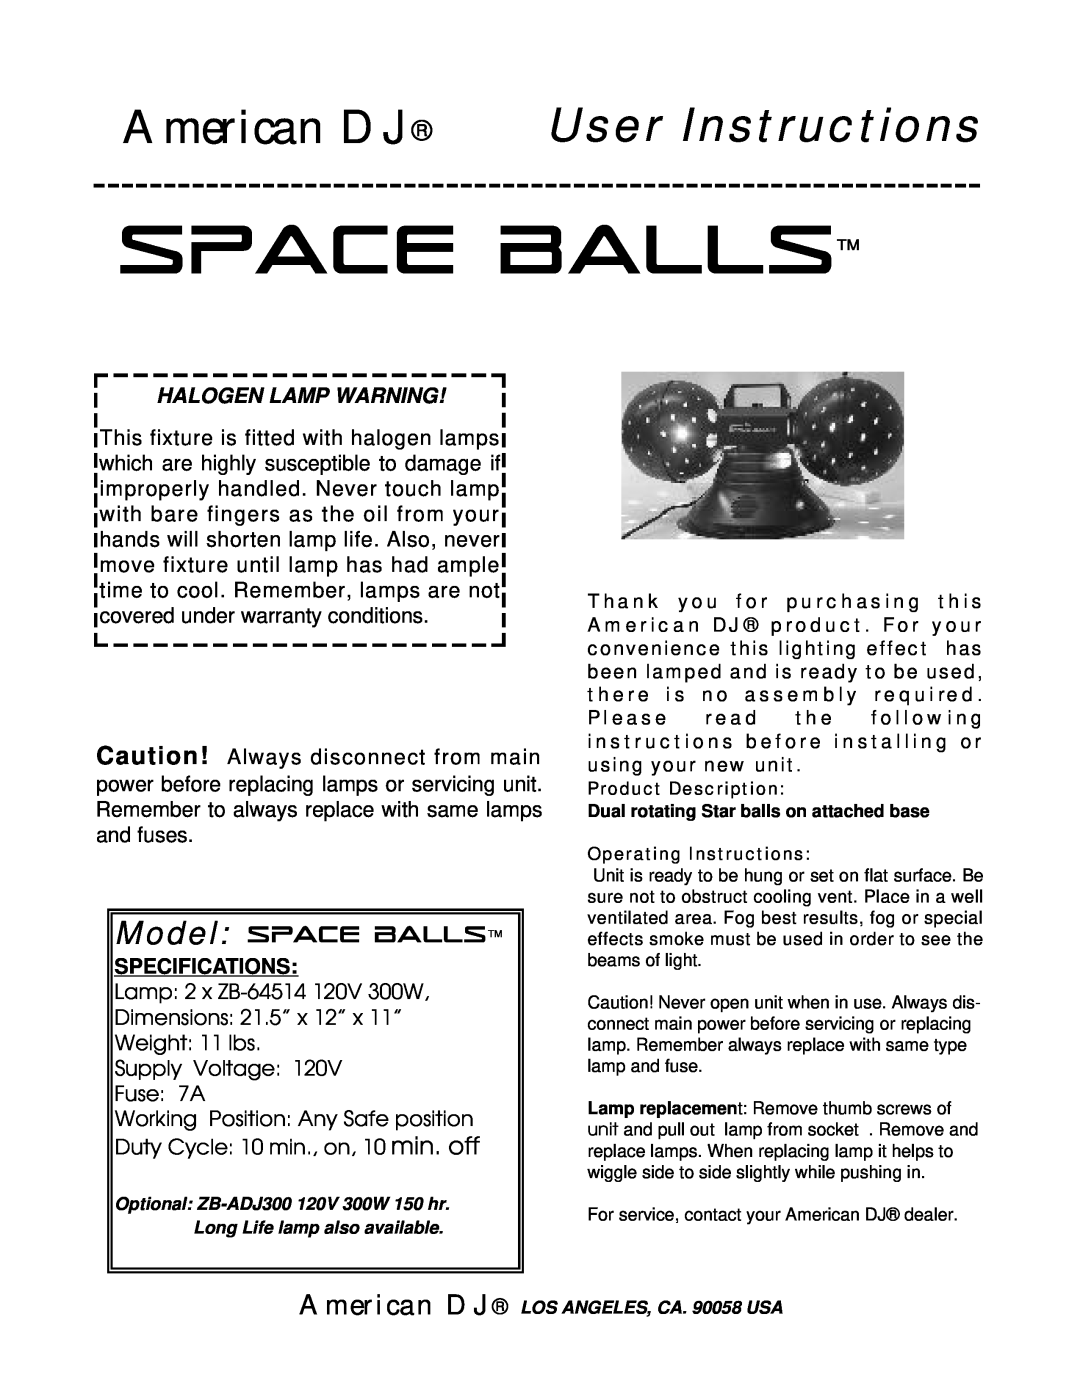 American DJ Space Balls warranty Space balls, American DJ User Instructions, Halogen Lamp Warning, Specifications 